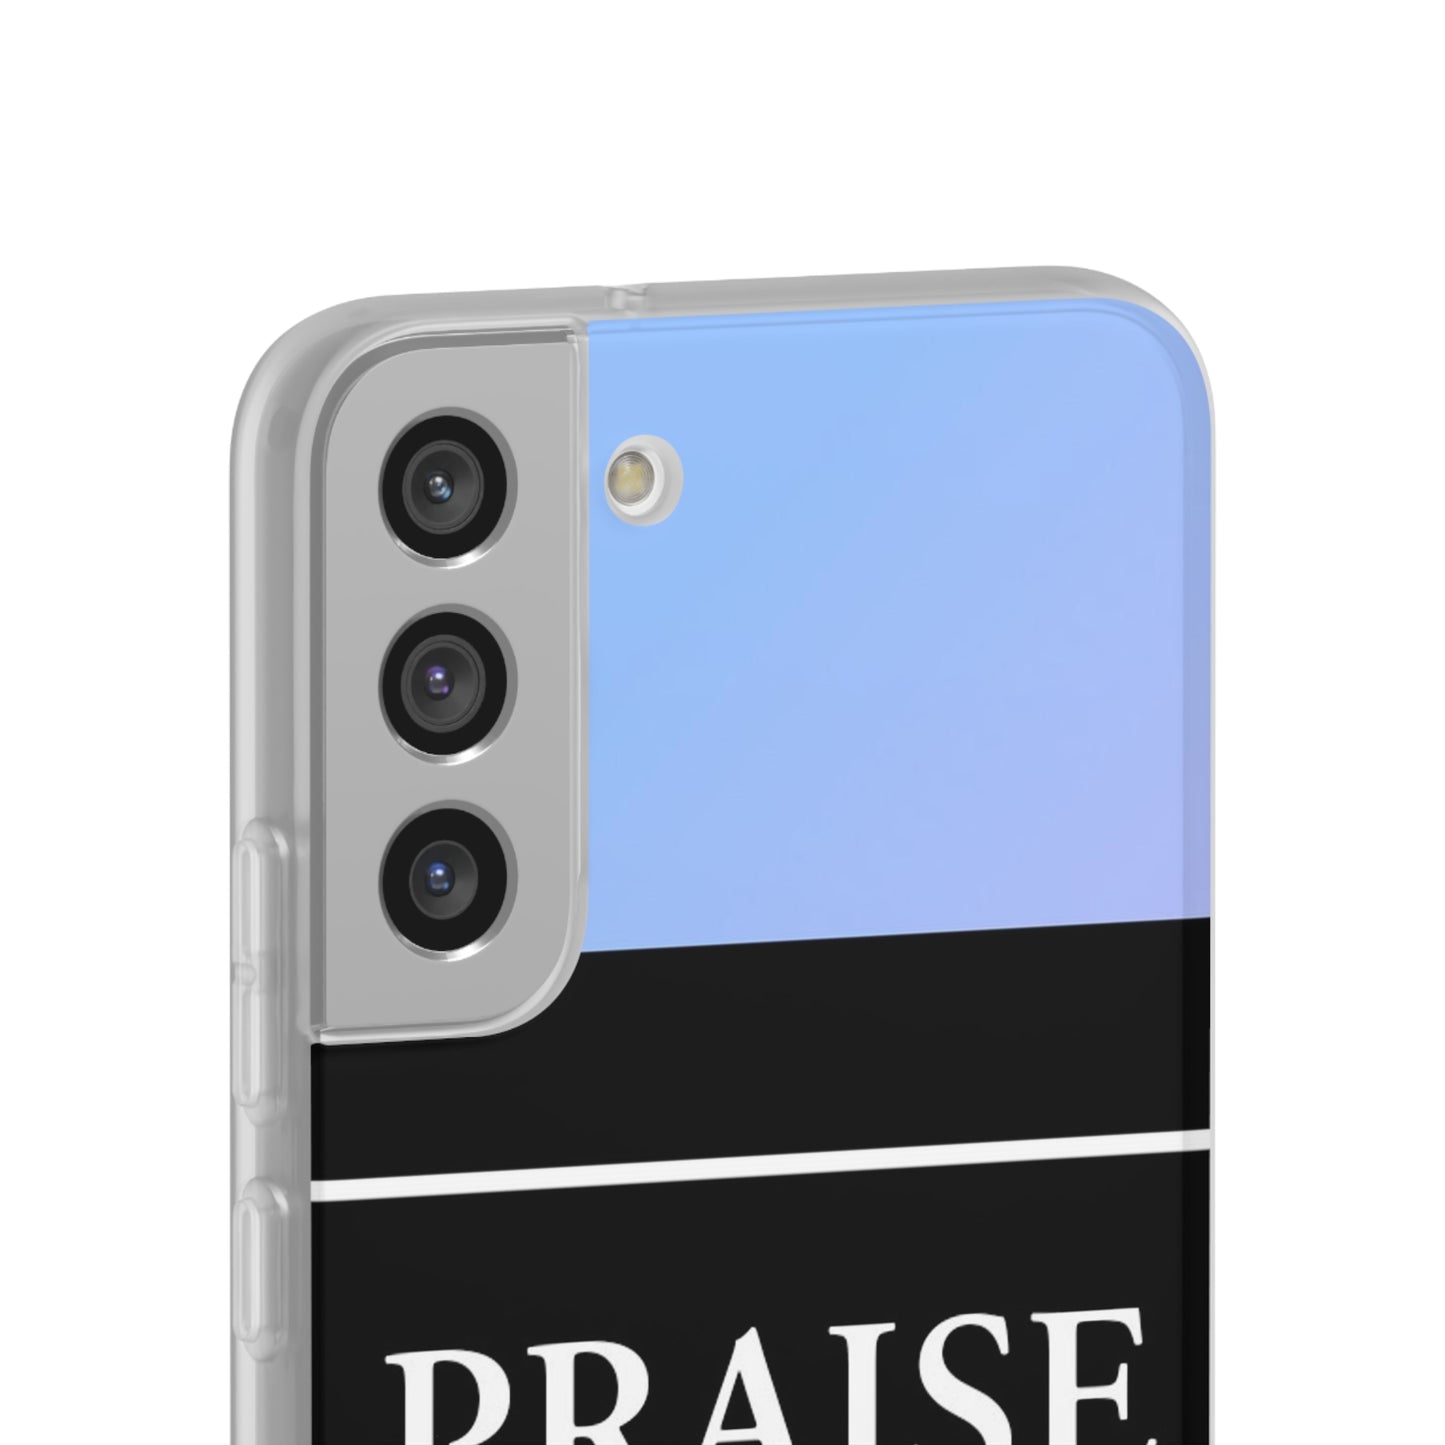 Praise Phone Case